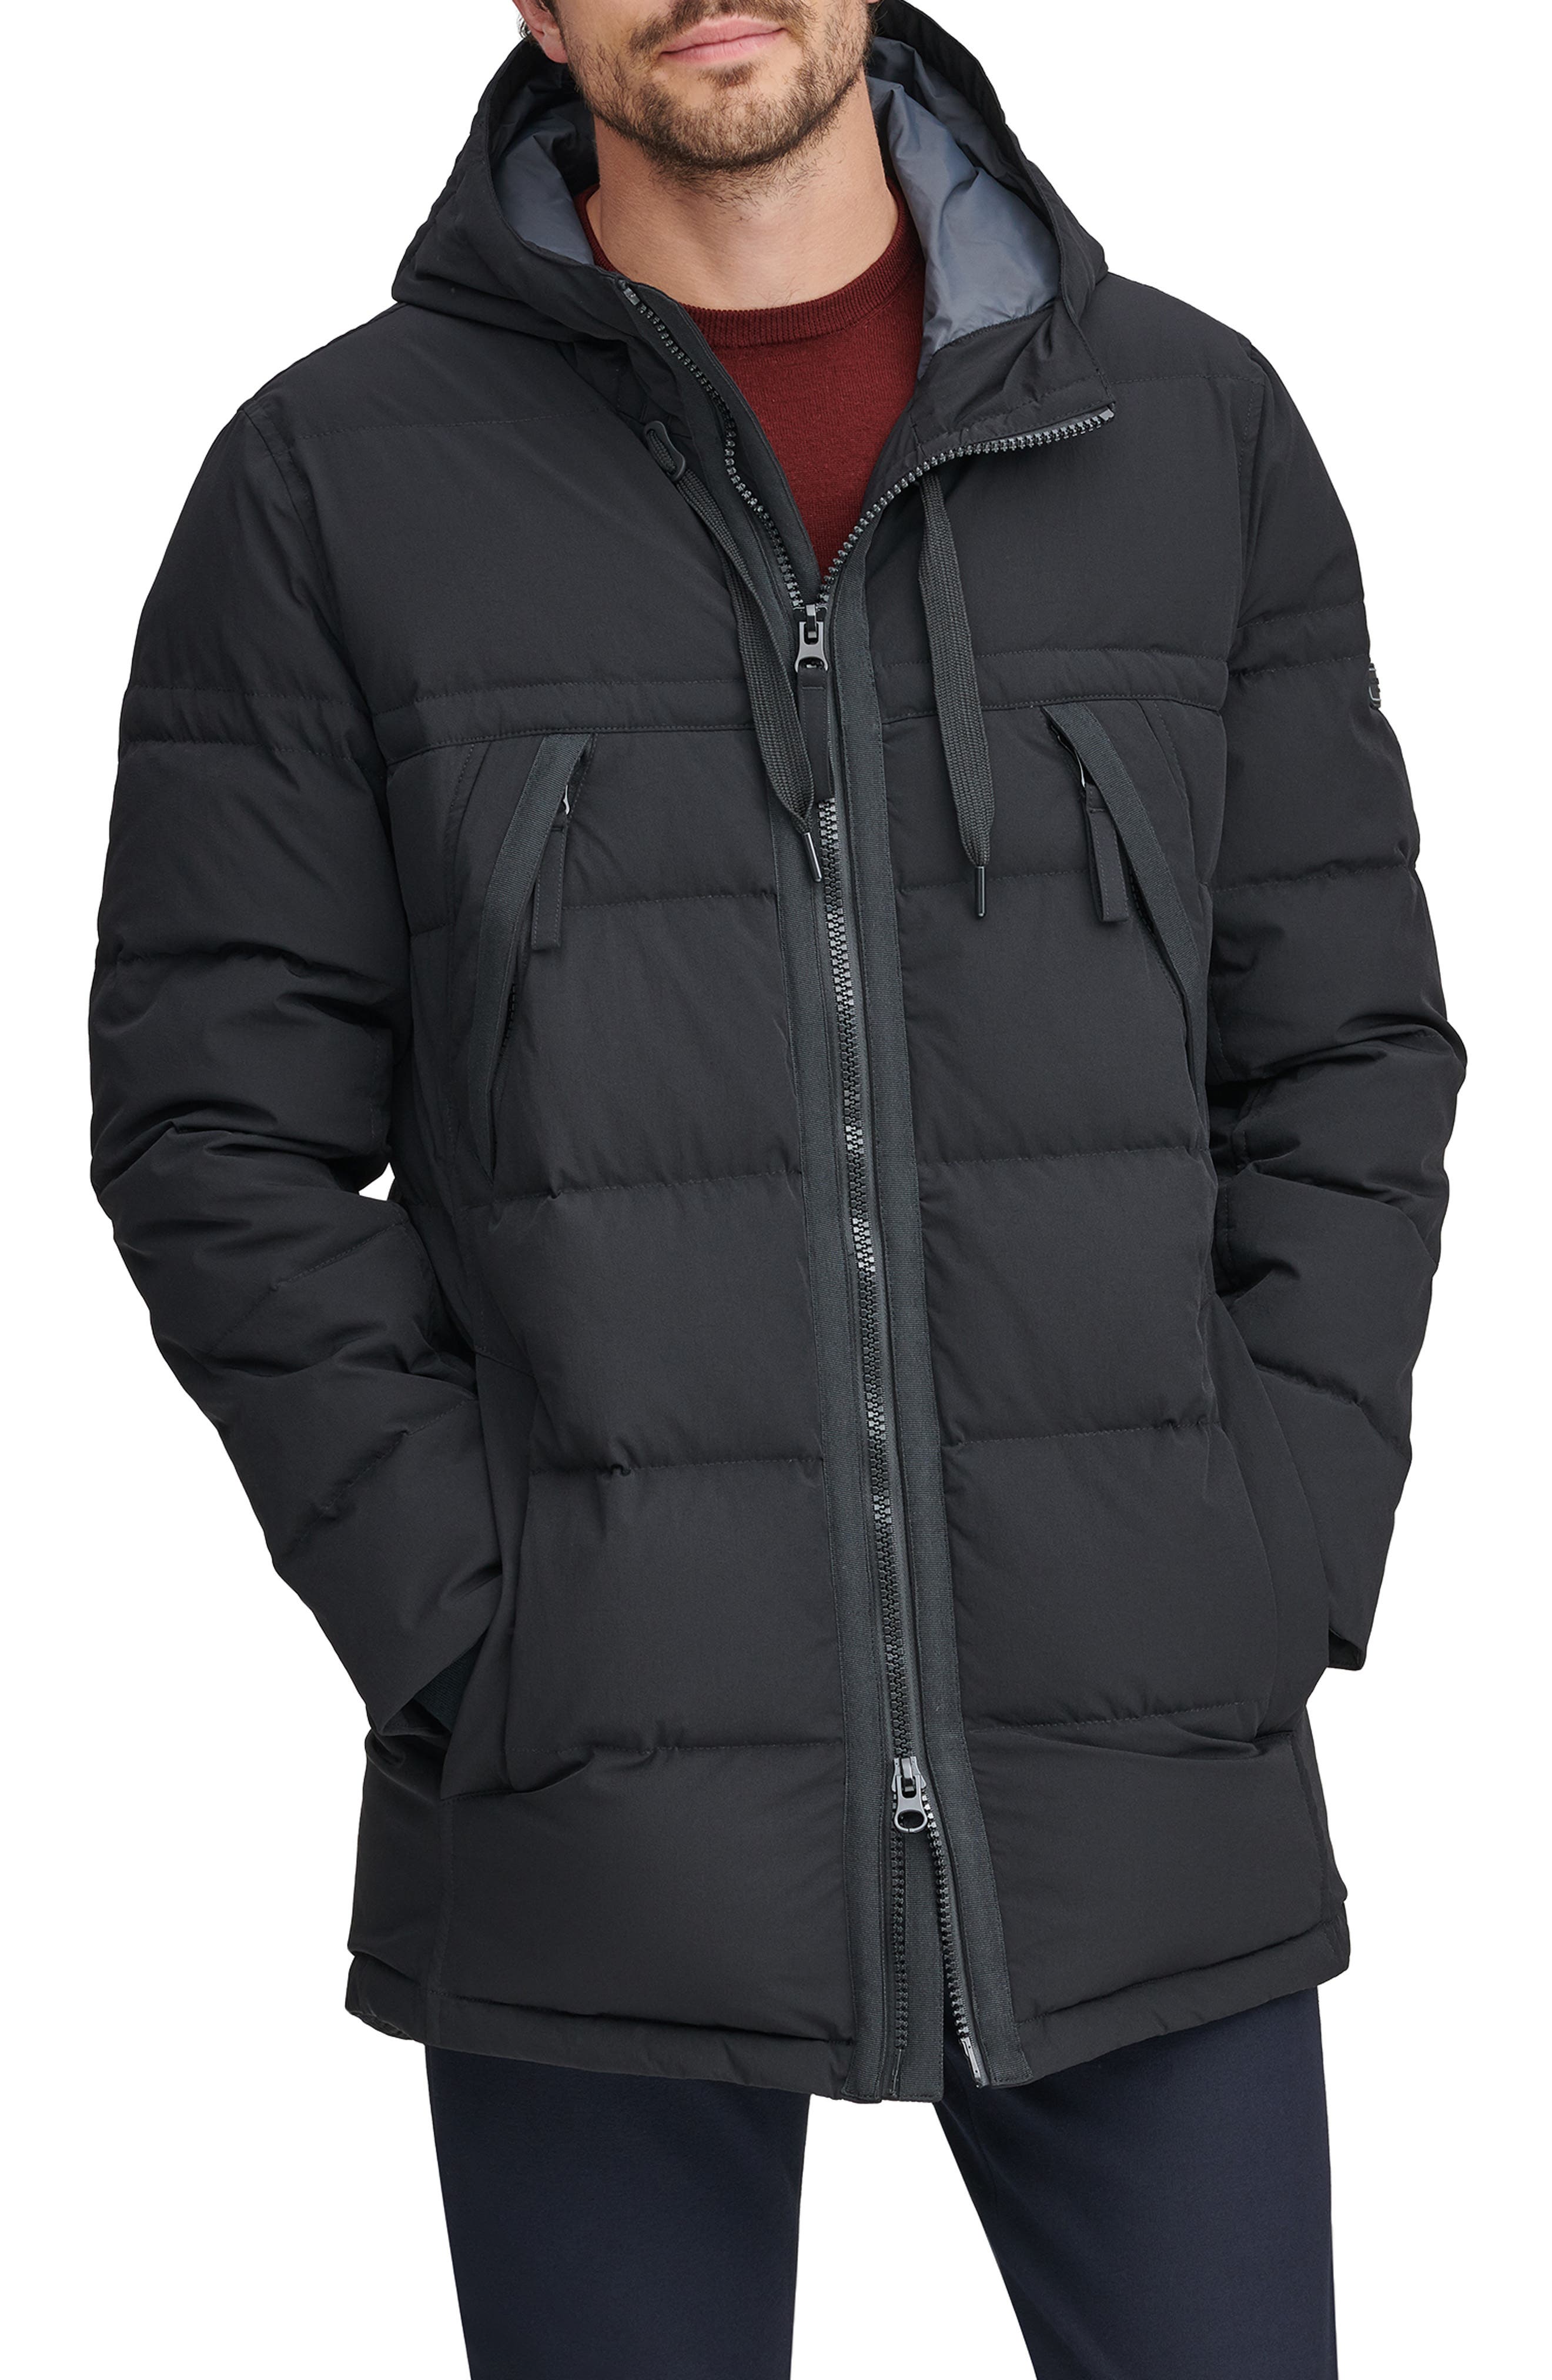 REYO Mens Coats Winter Hooded Sweatshirt Long Sleeve Hoodie Stitching Zipper Coat Jacket Outwear Sport Tops 